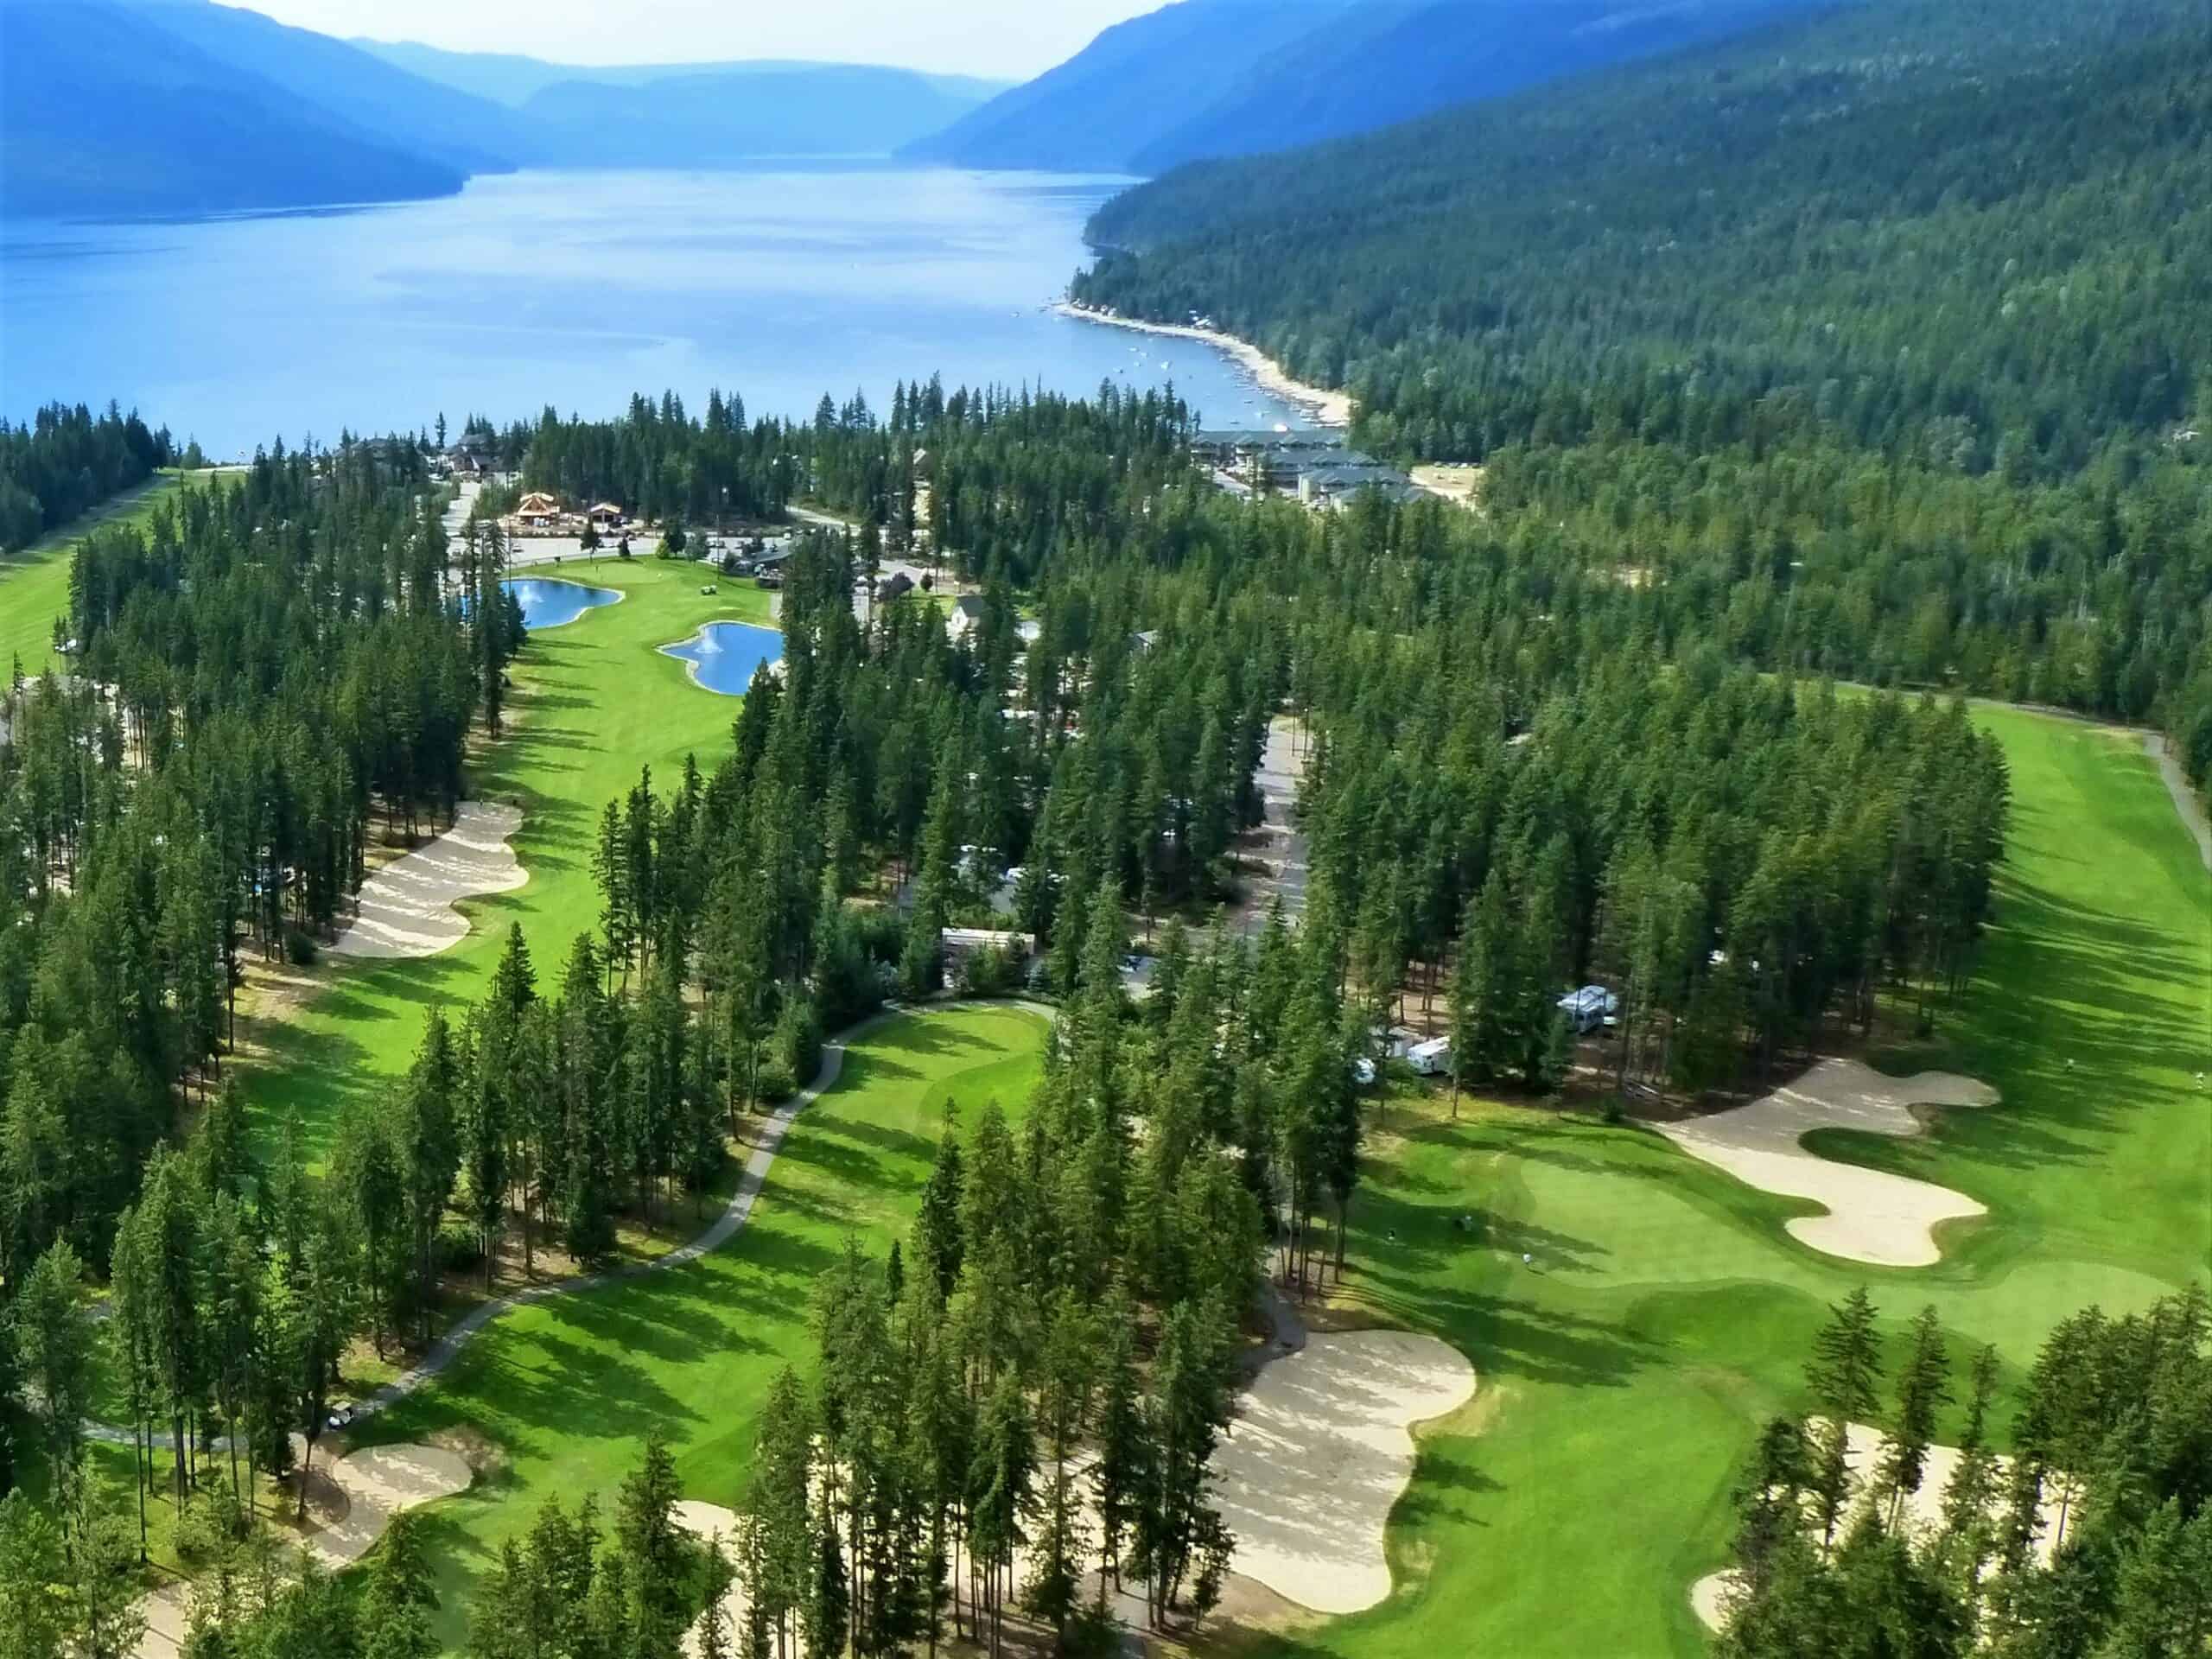 golf-course-aerial